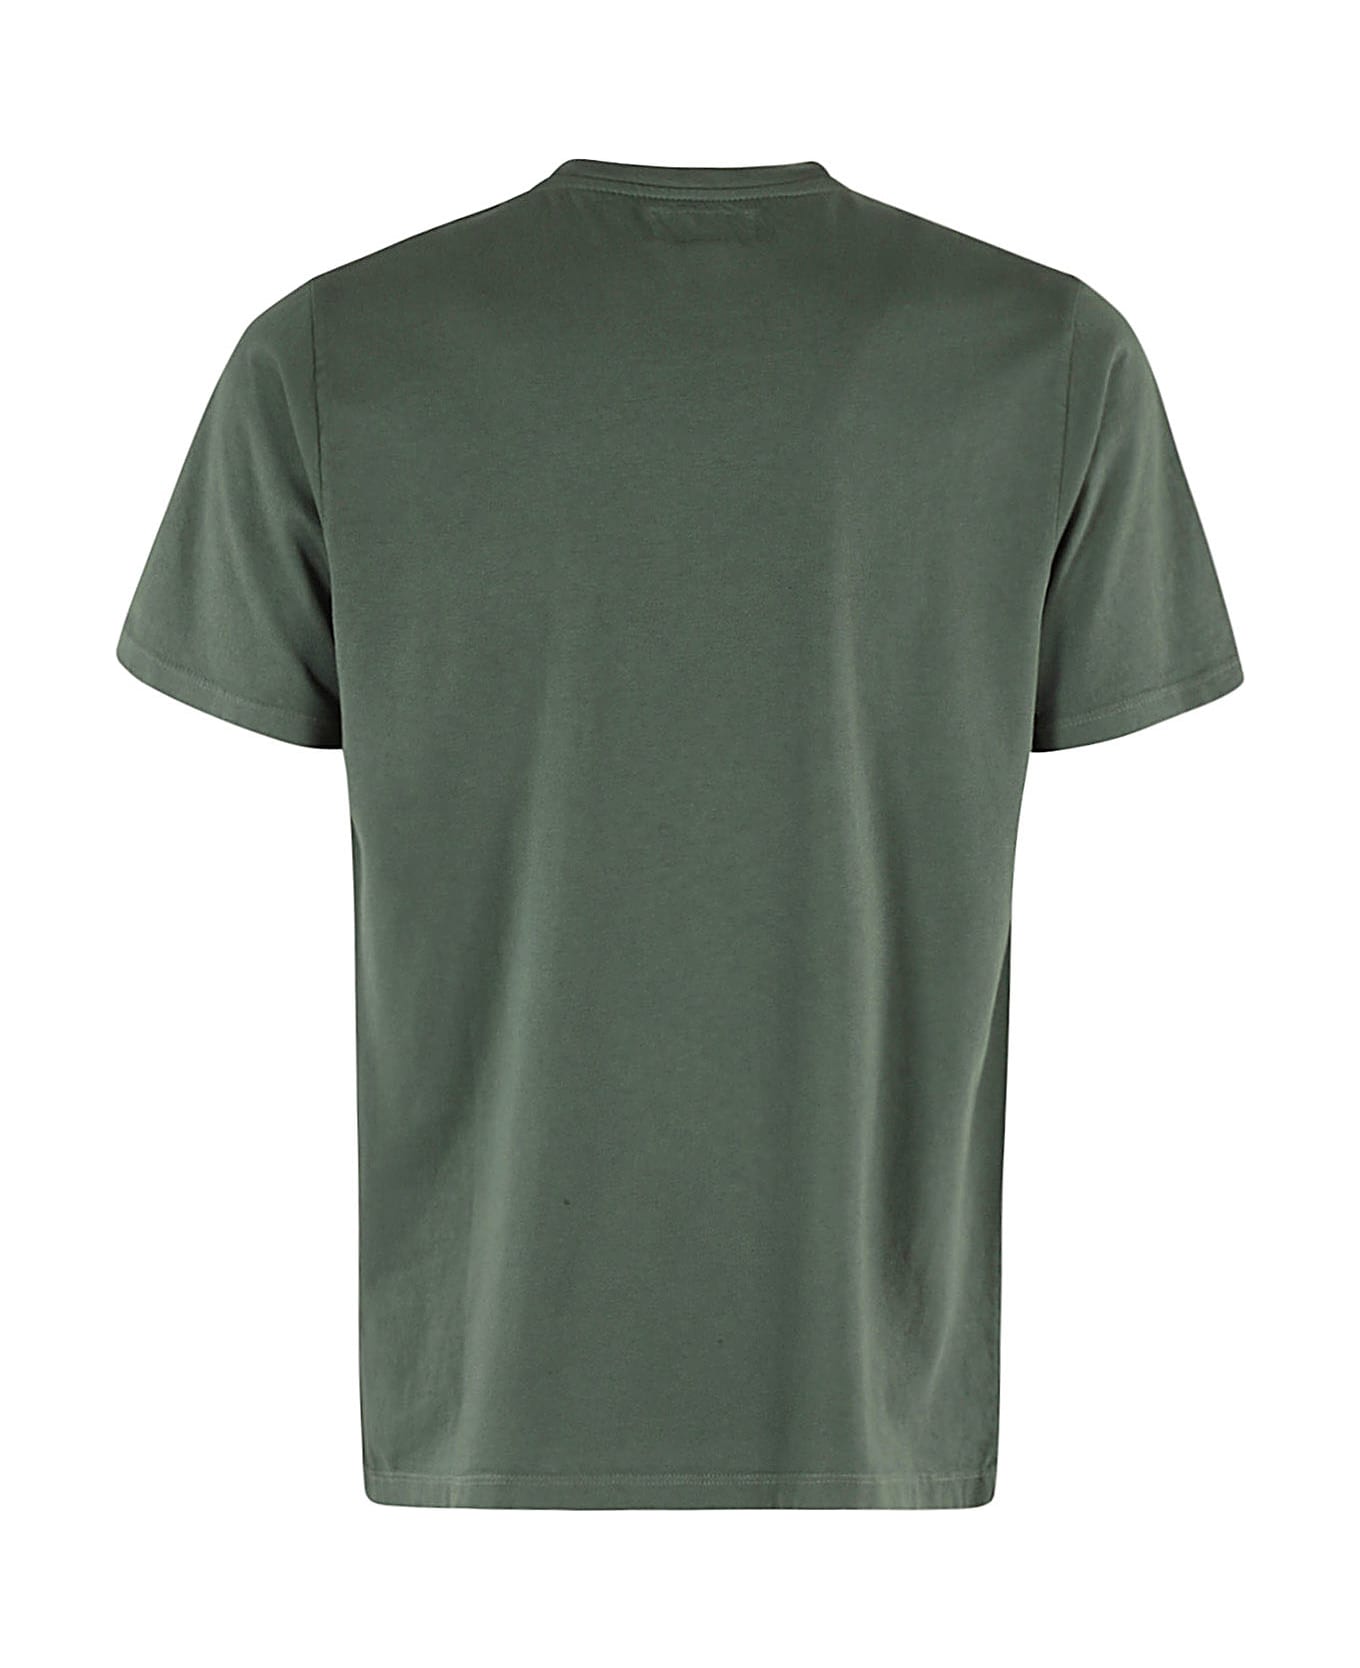 Roy Rogers T Shirt Pocket - University Green シャツ